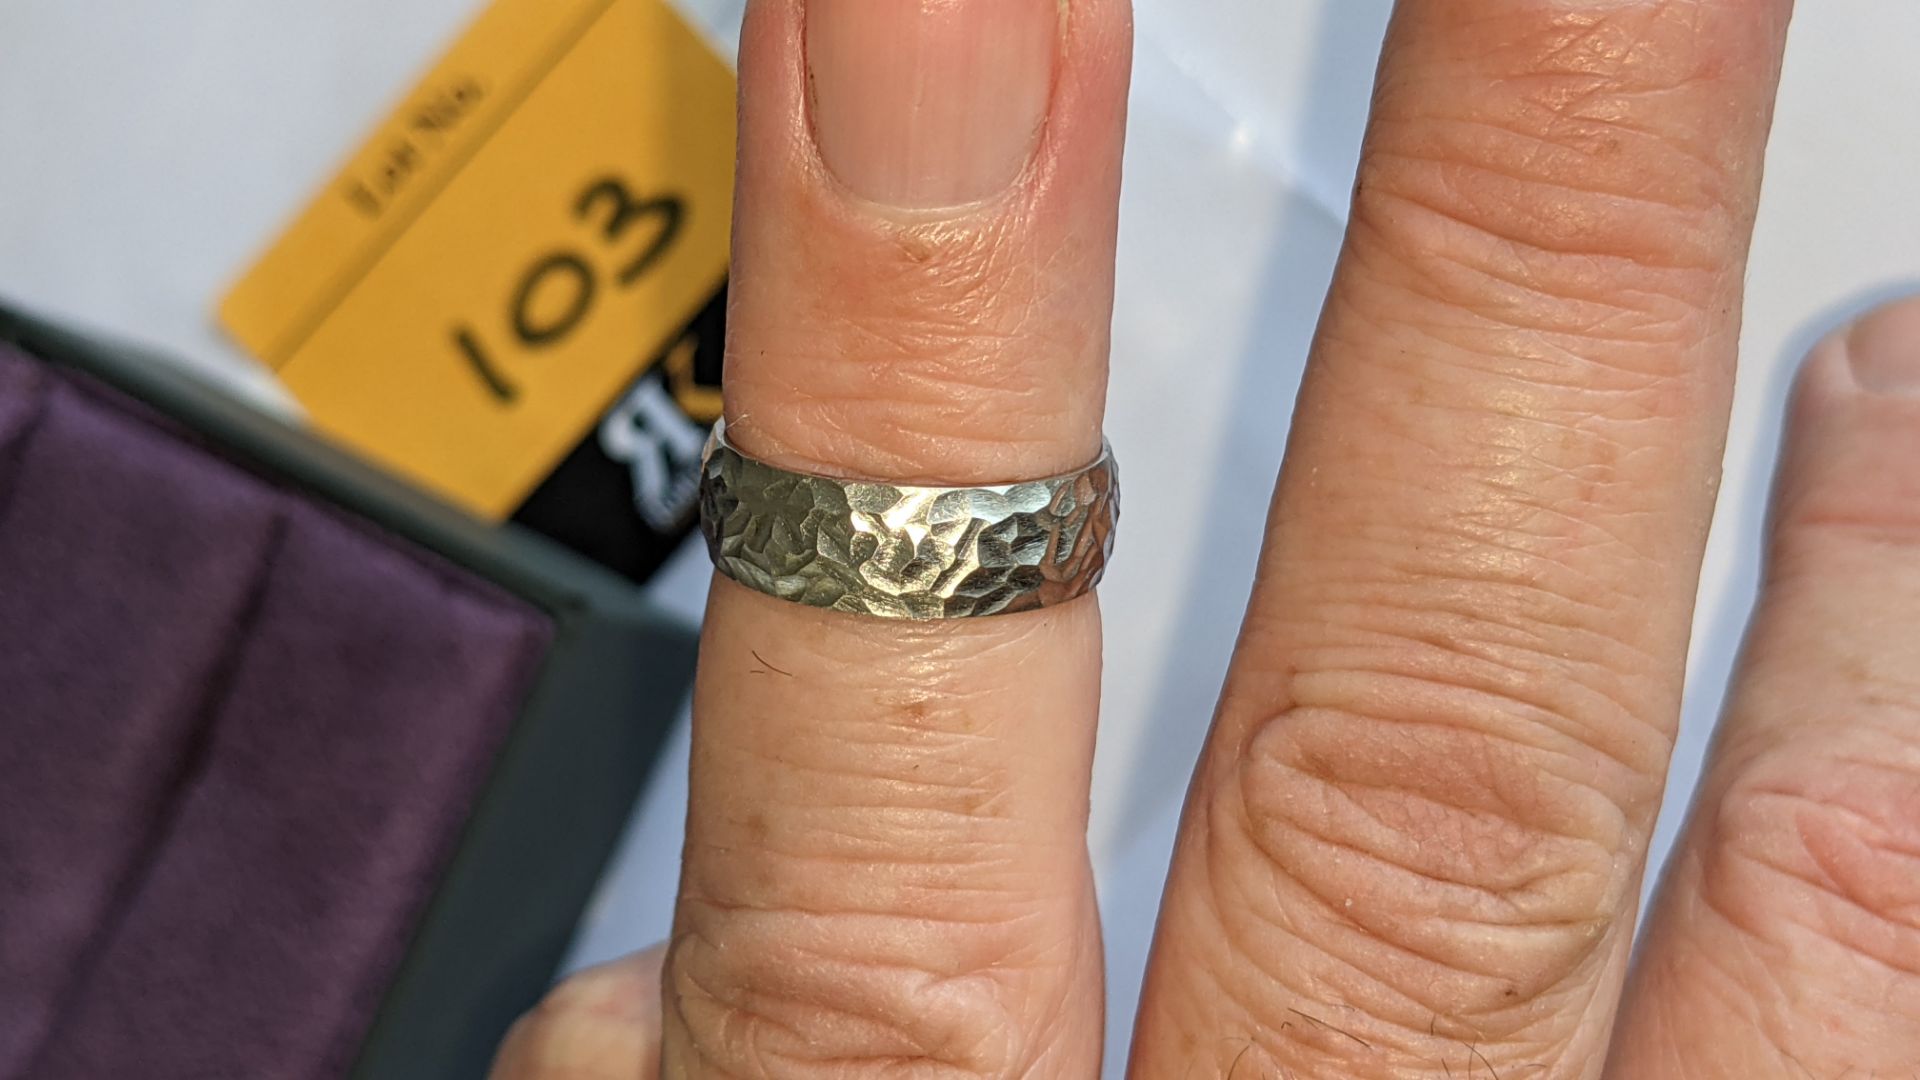 Platinum 950 6mm textured wedding ring. RRP £850 - Image 11 of 12